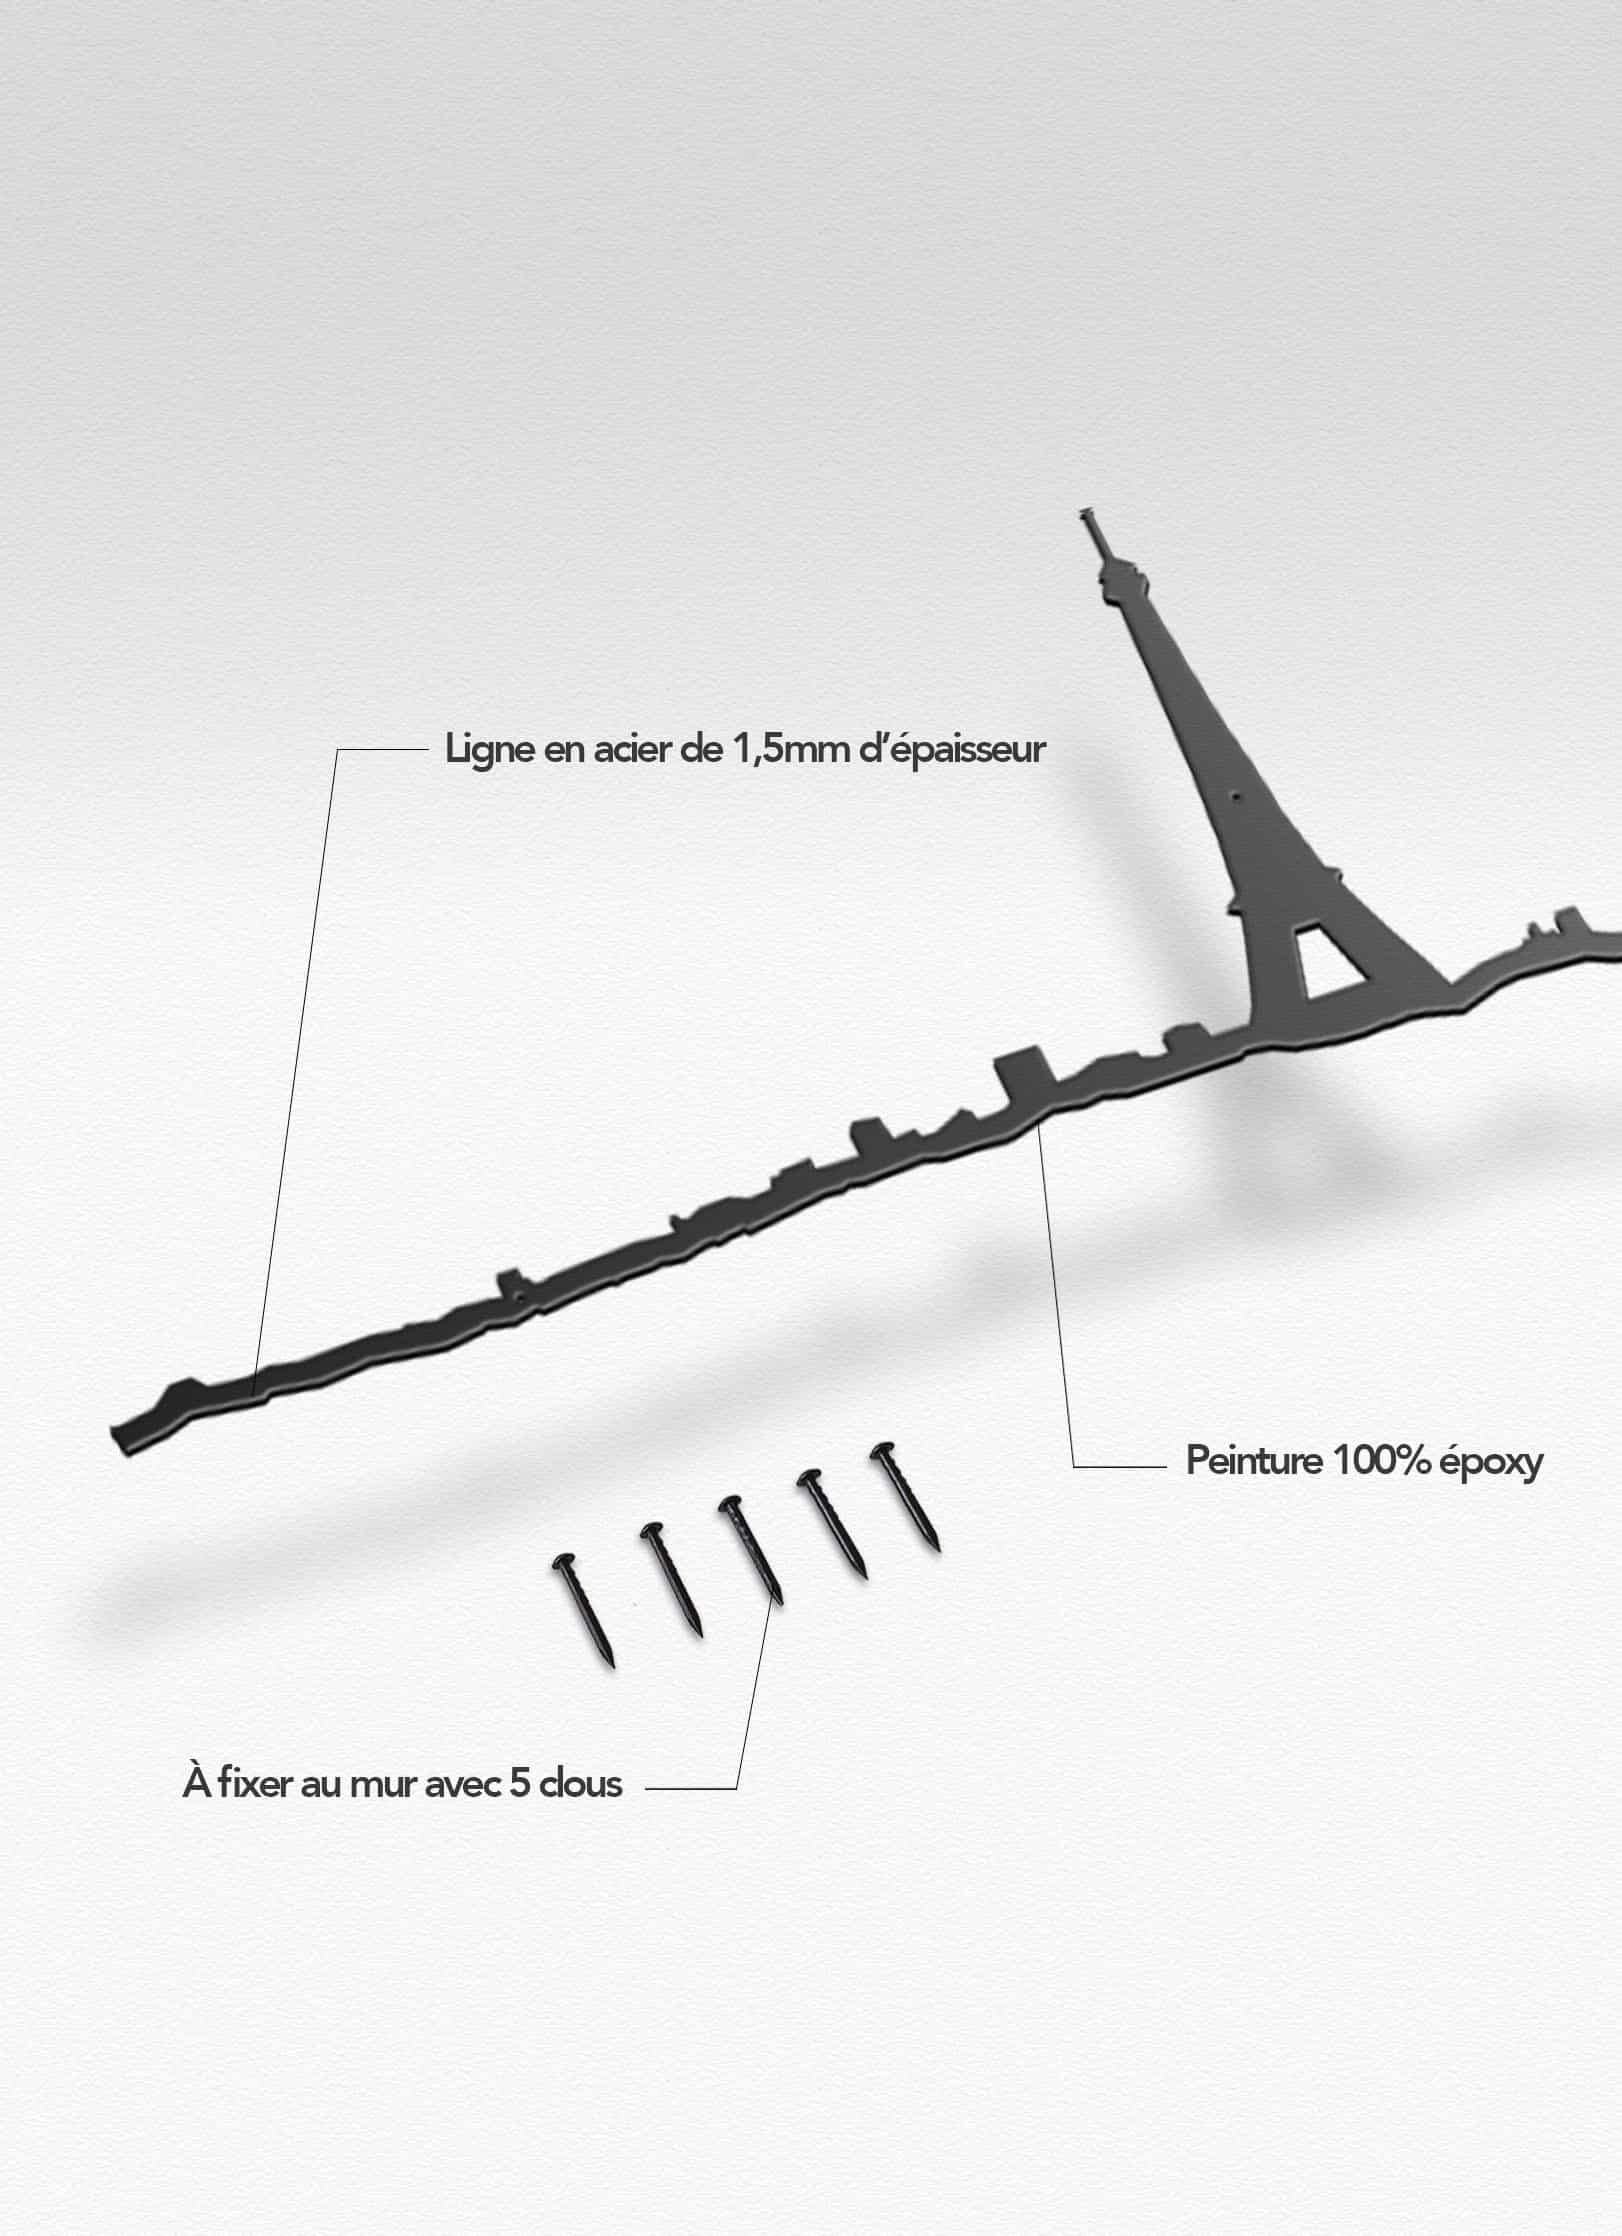 Presentation of the skyline of Paris XL